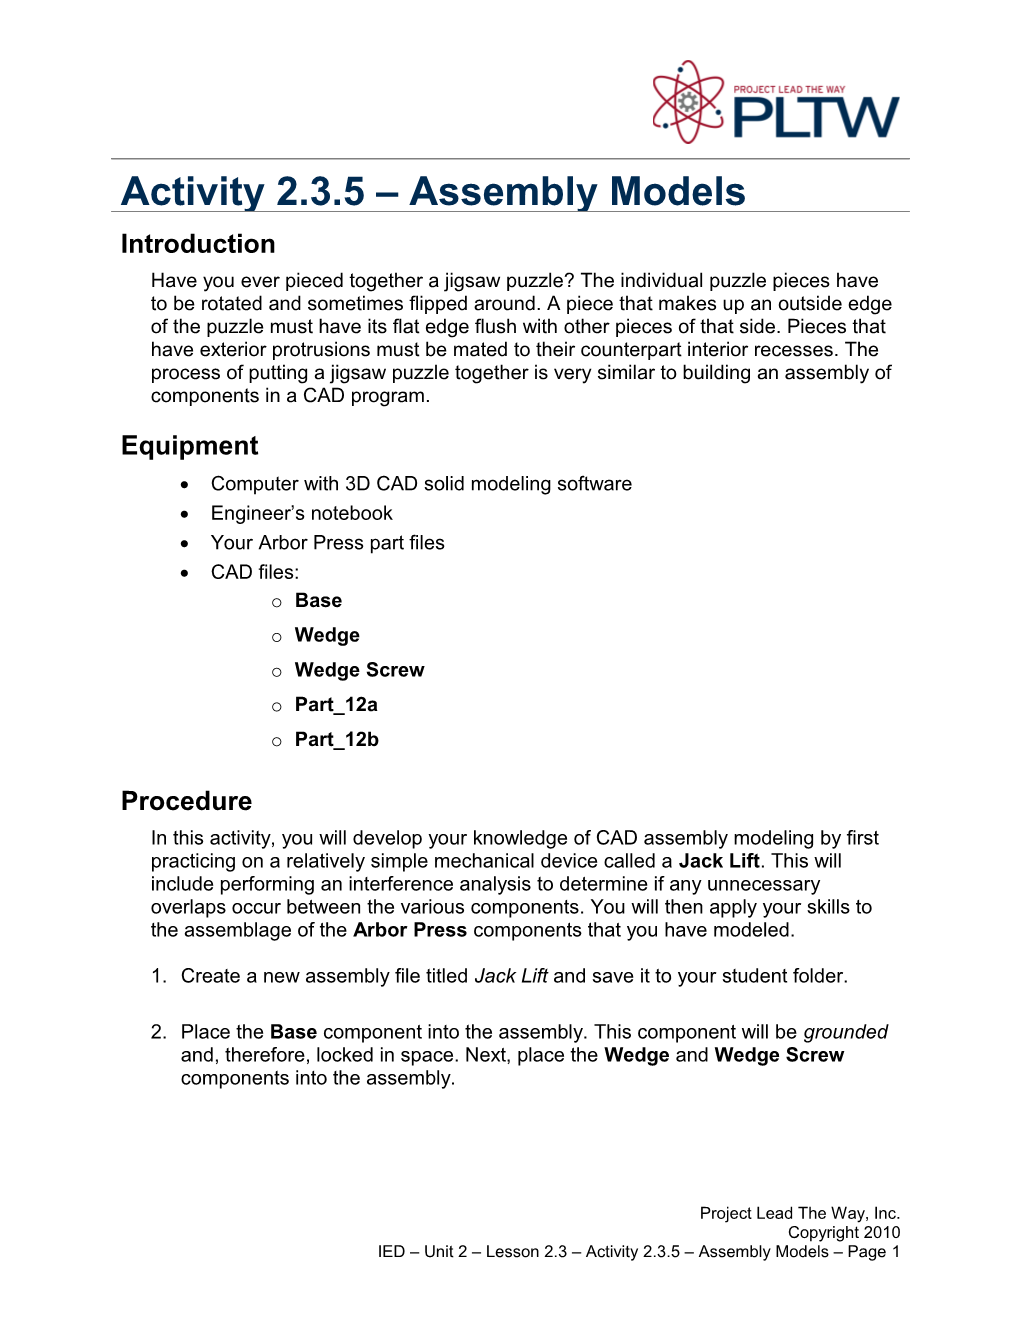 Activity 2.3.5: Assembly Models